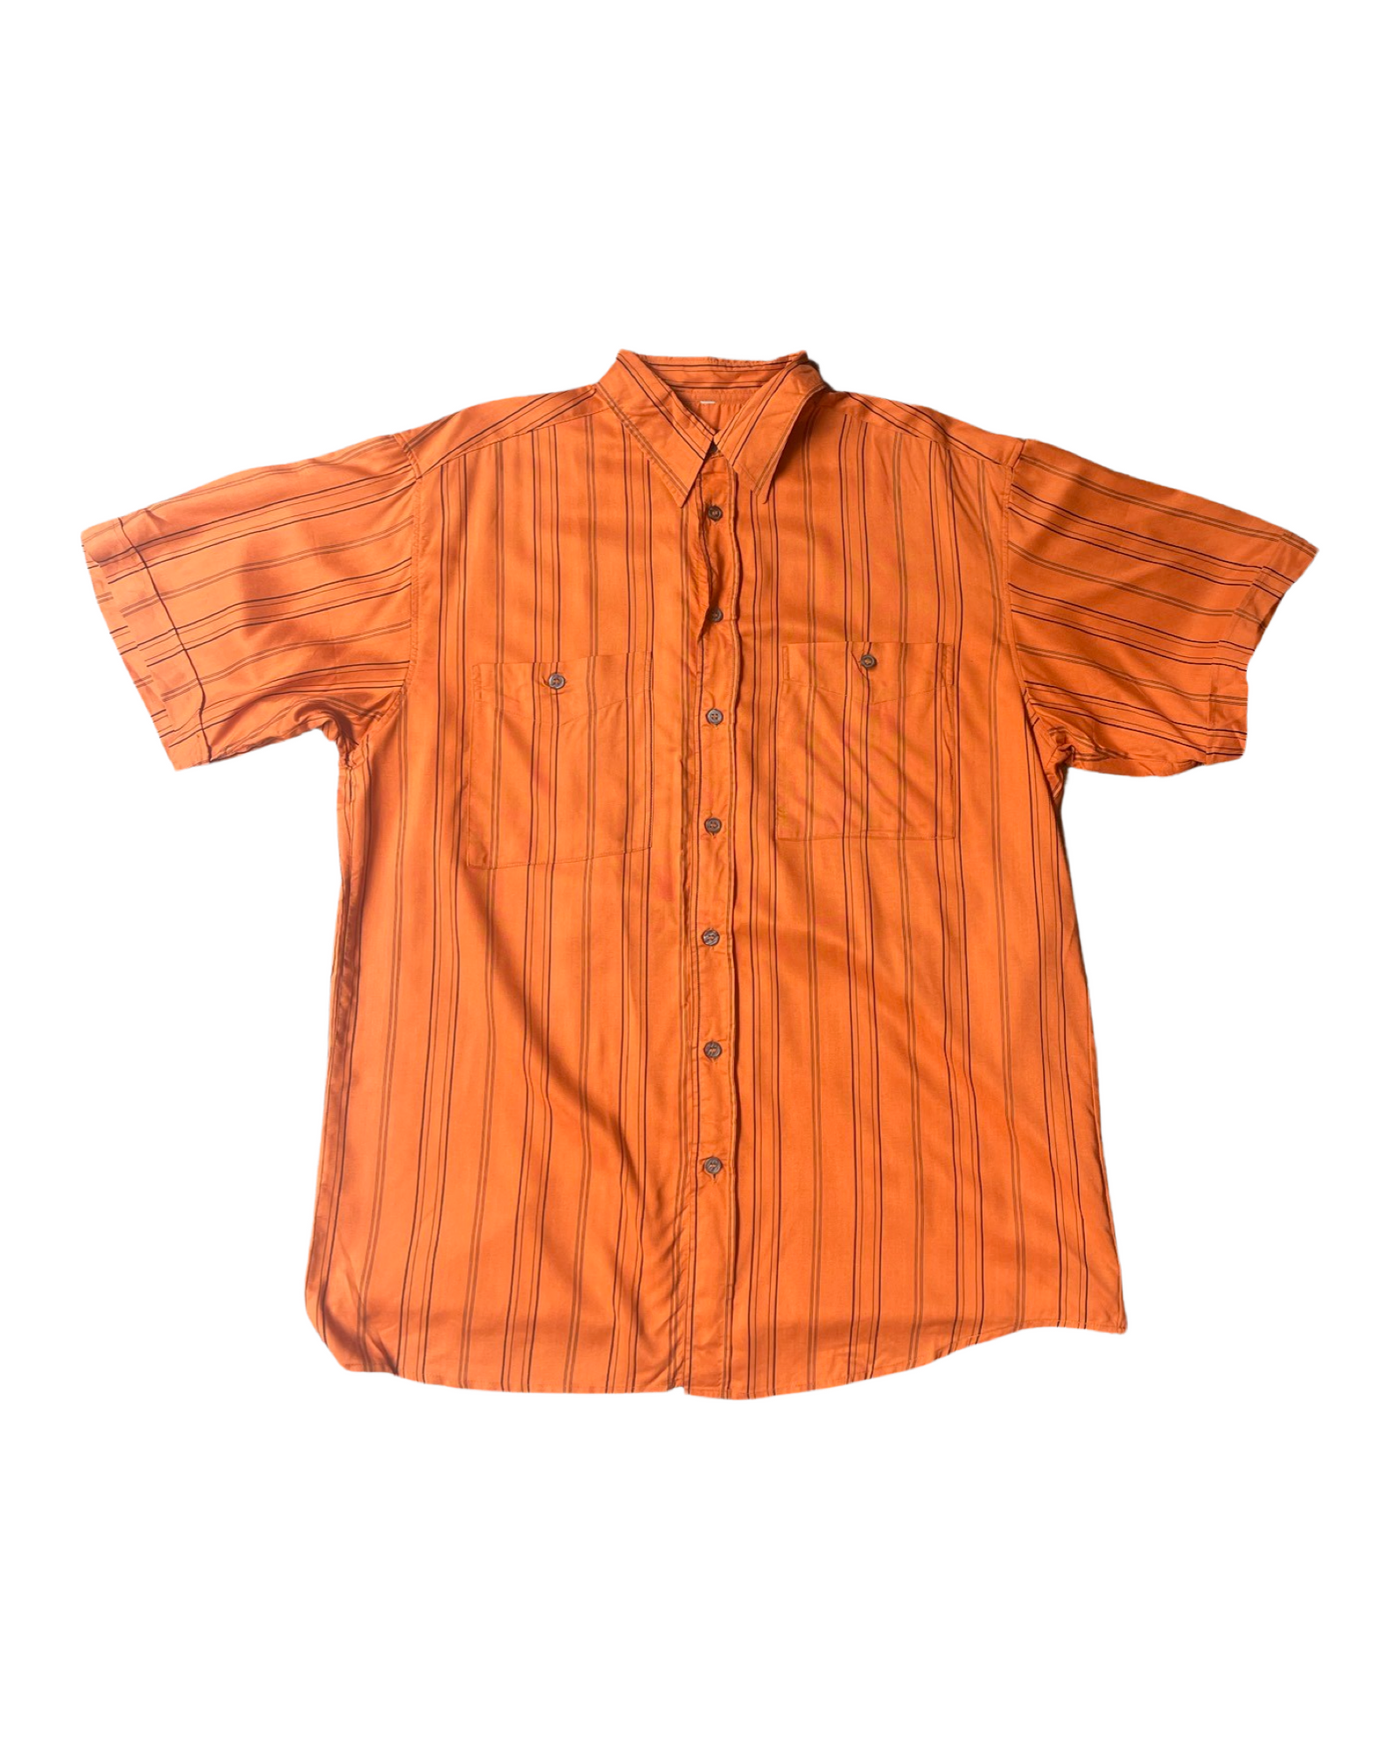 Vintage 90’s Stripe Shirt